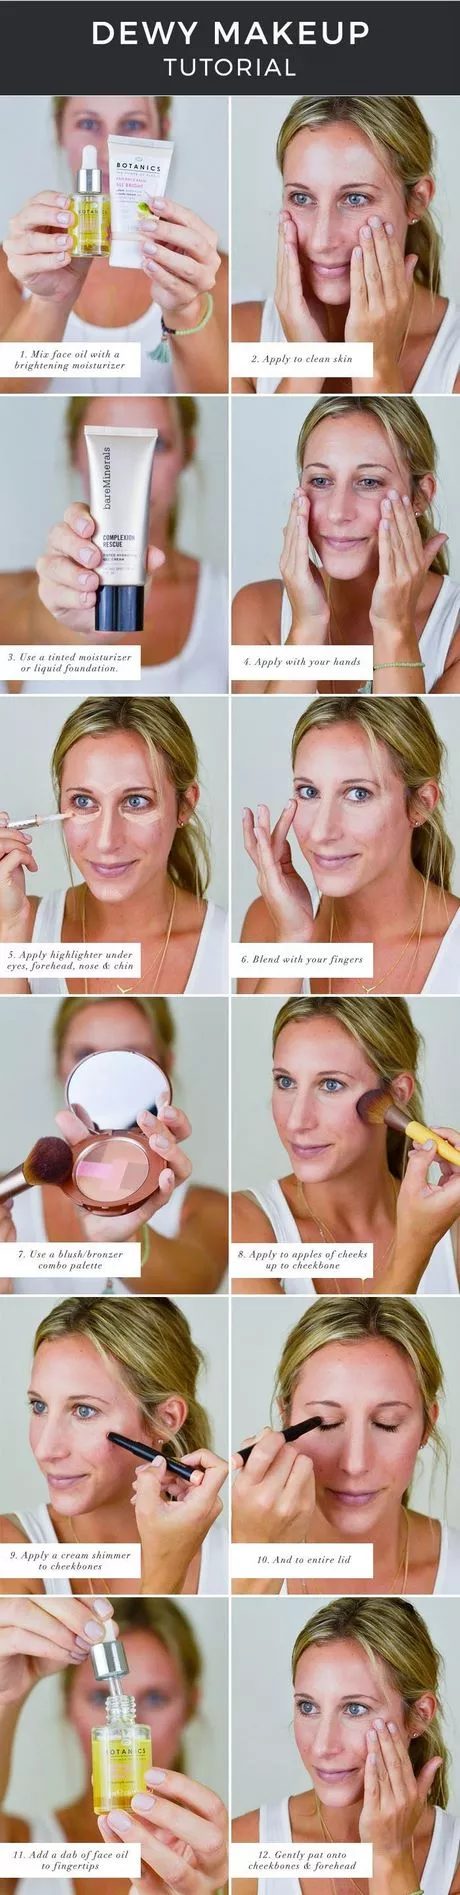 get-it-beauty-makeup-tutorial-03_17-9 Get it beauty make-up tutorial